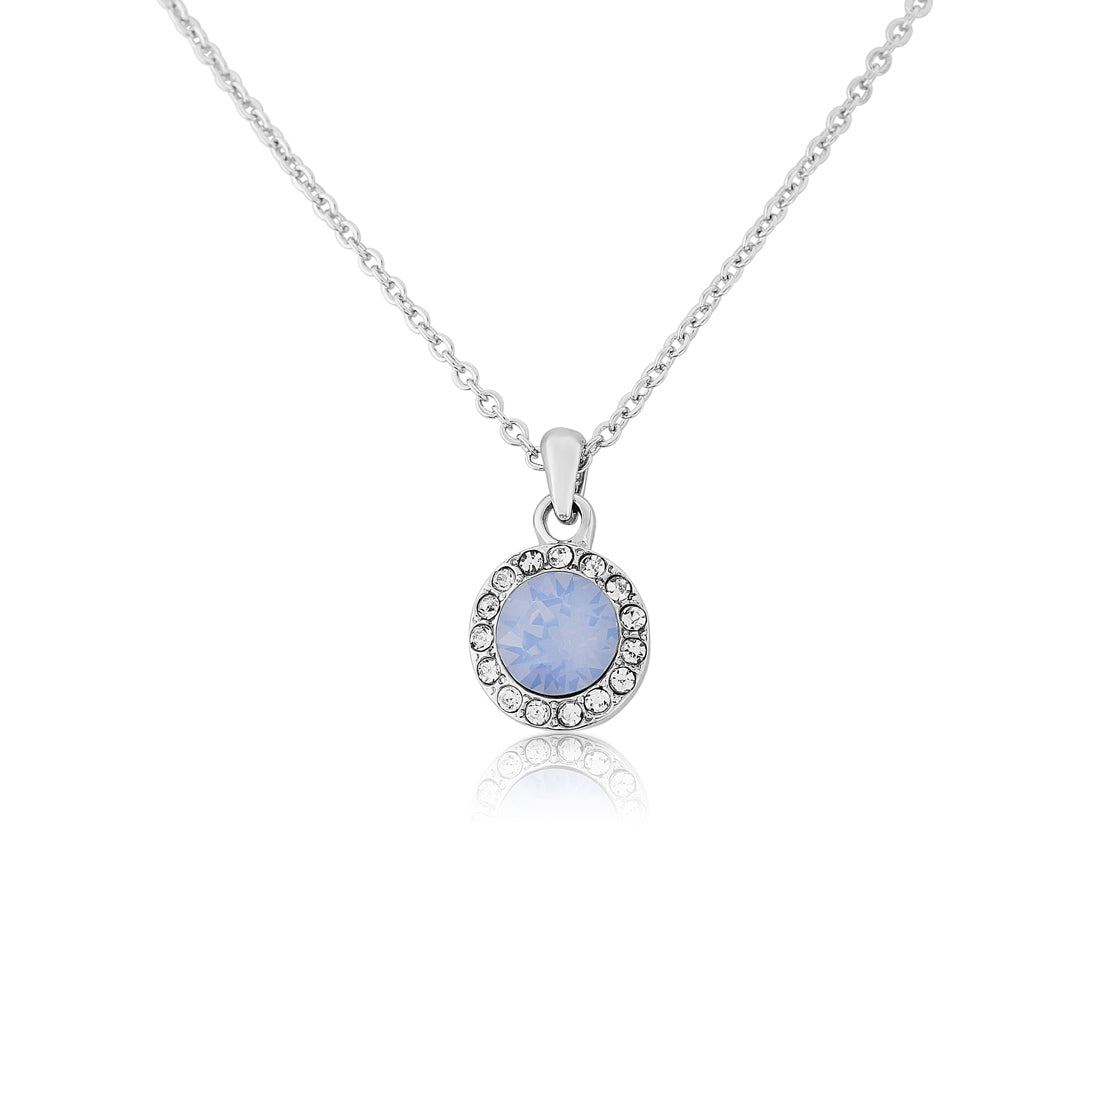 Shimmering Sky pale blue crystal wedding necklace pendant